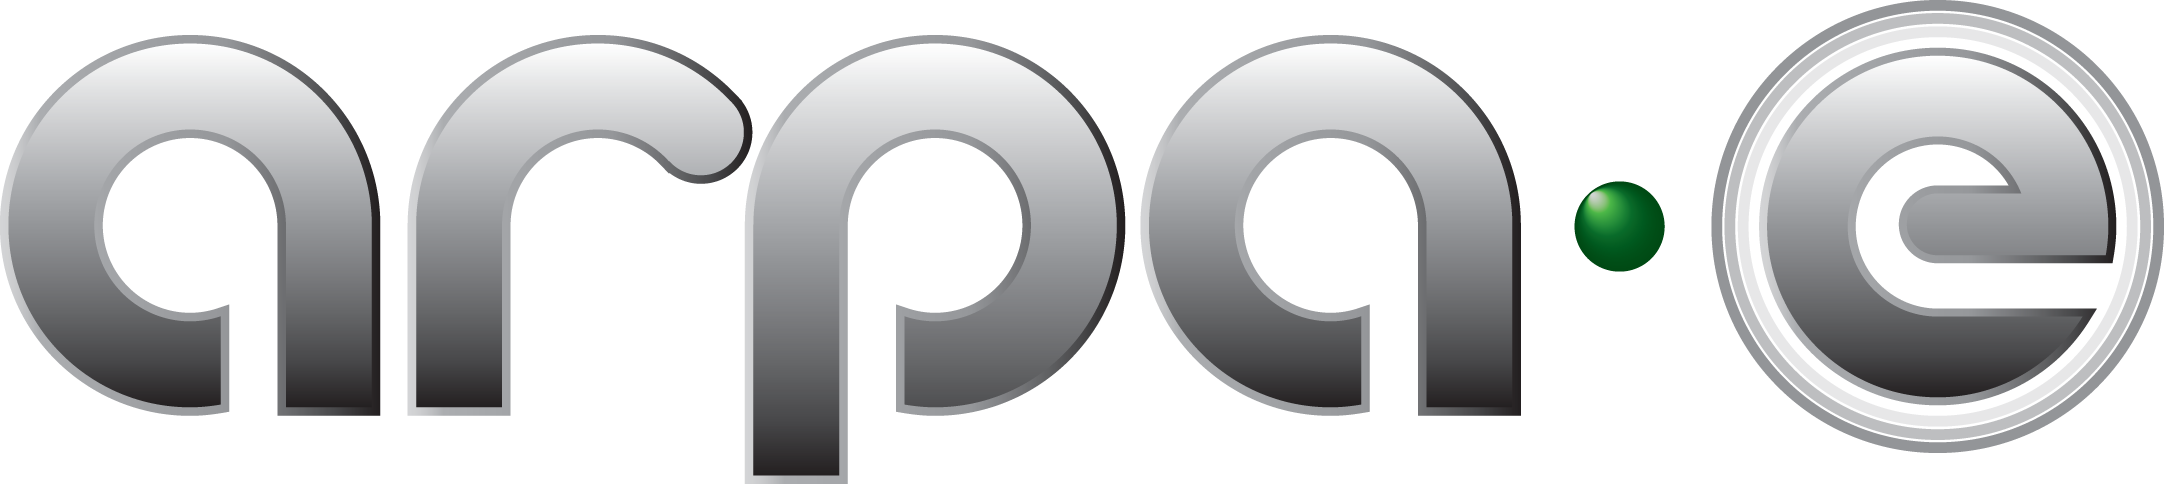 Washington ARPA-E Logo.png